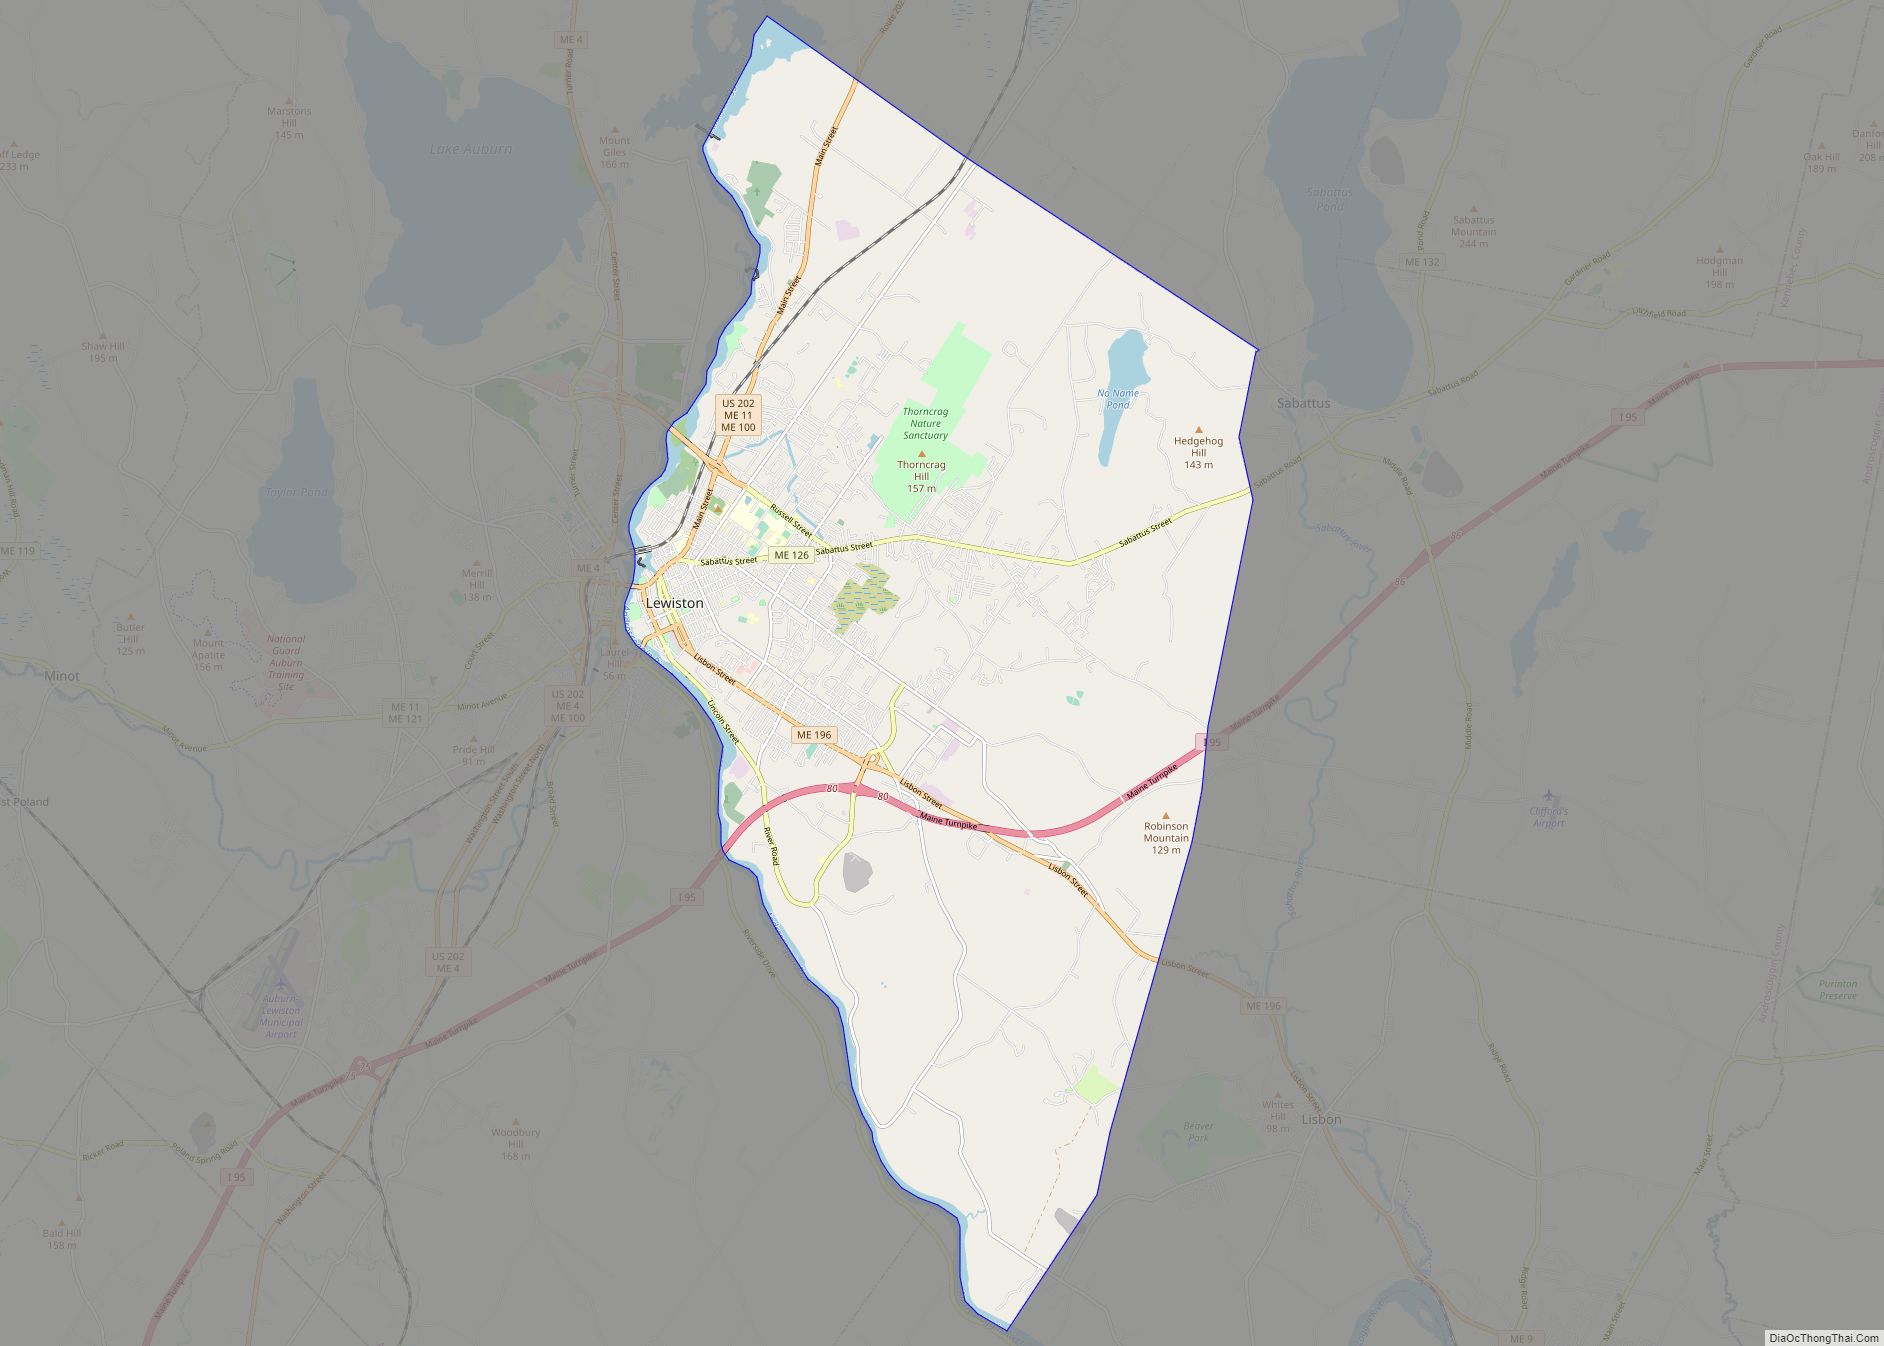 Map of Lewiston city, Maine